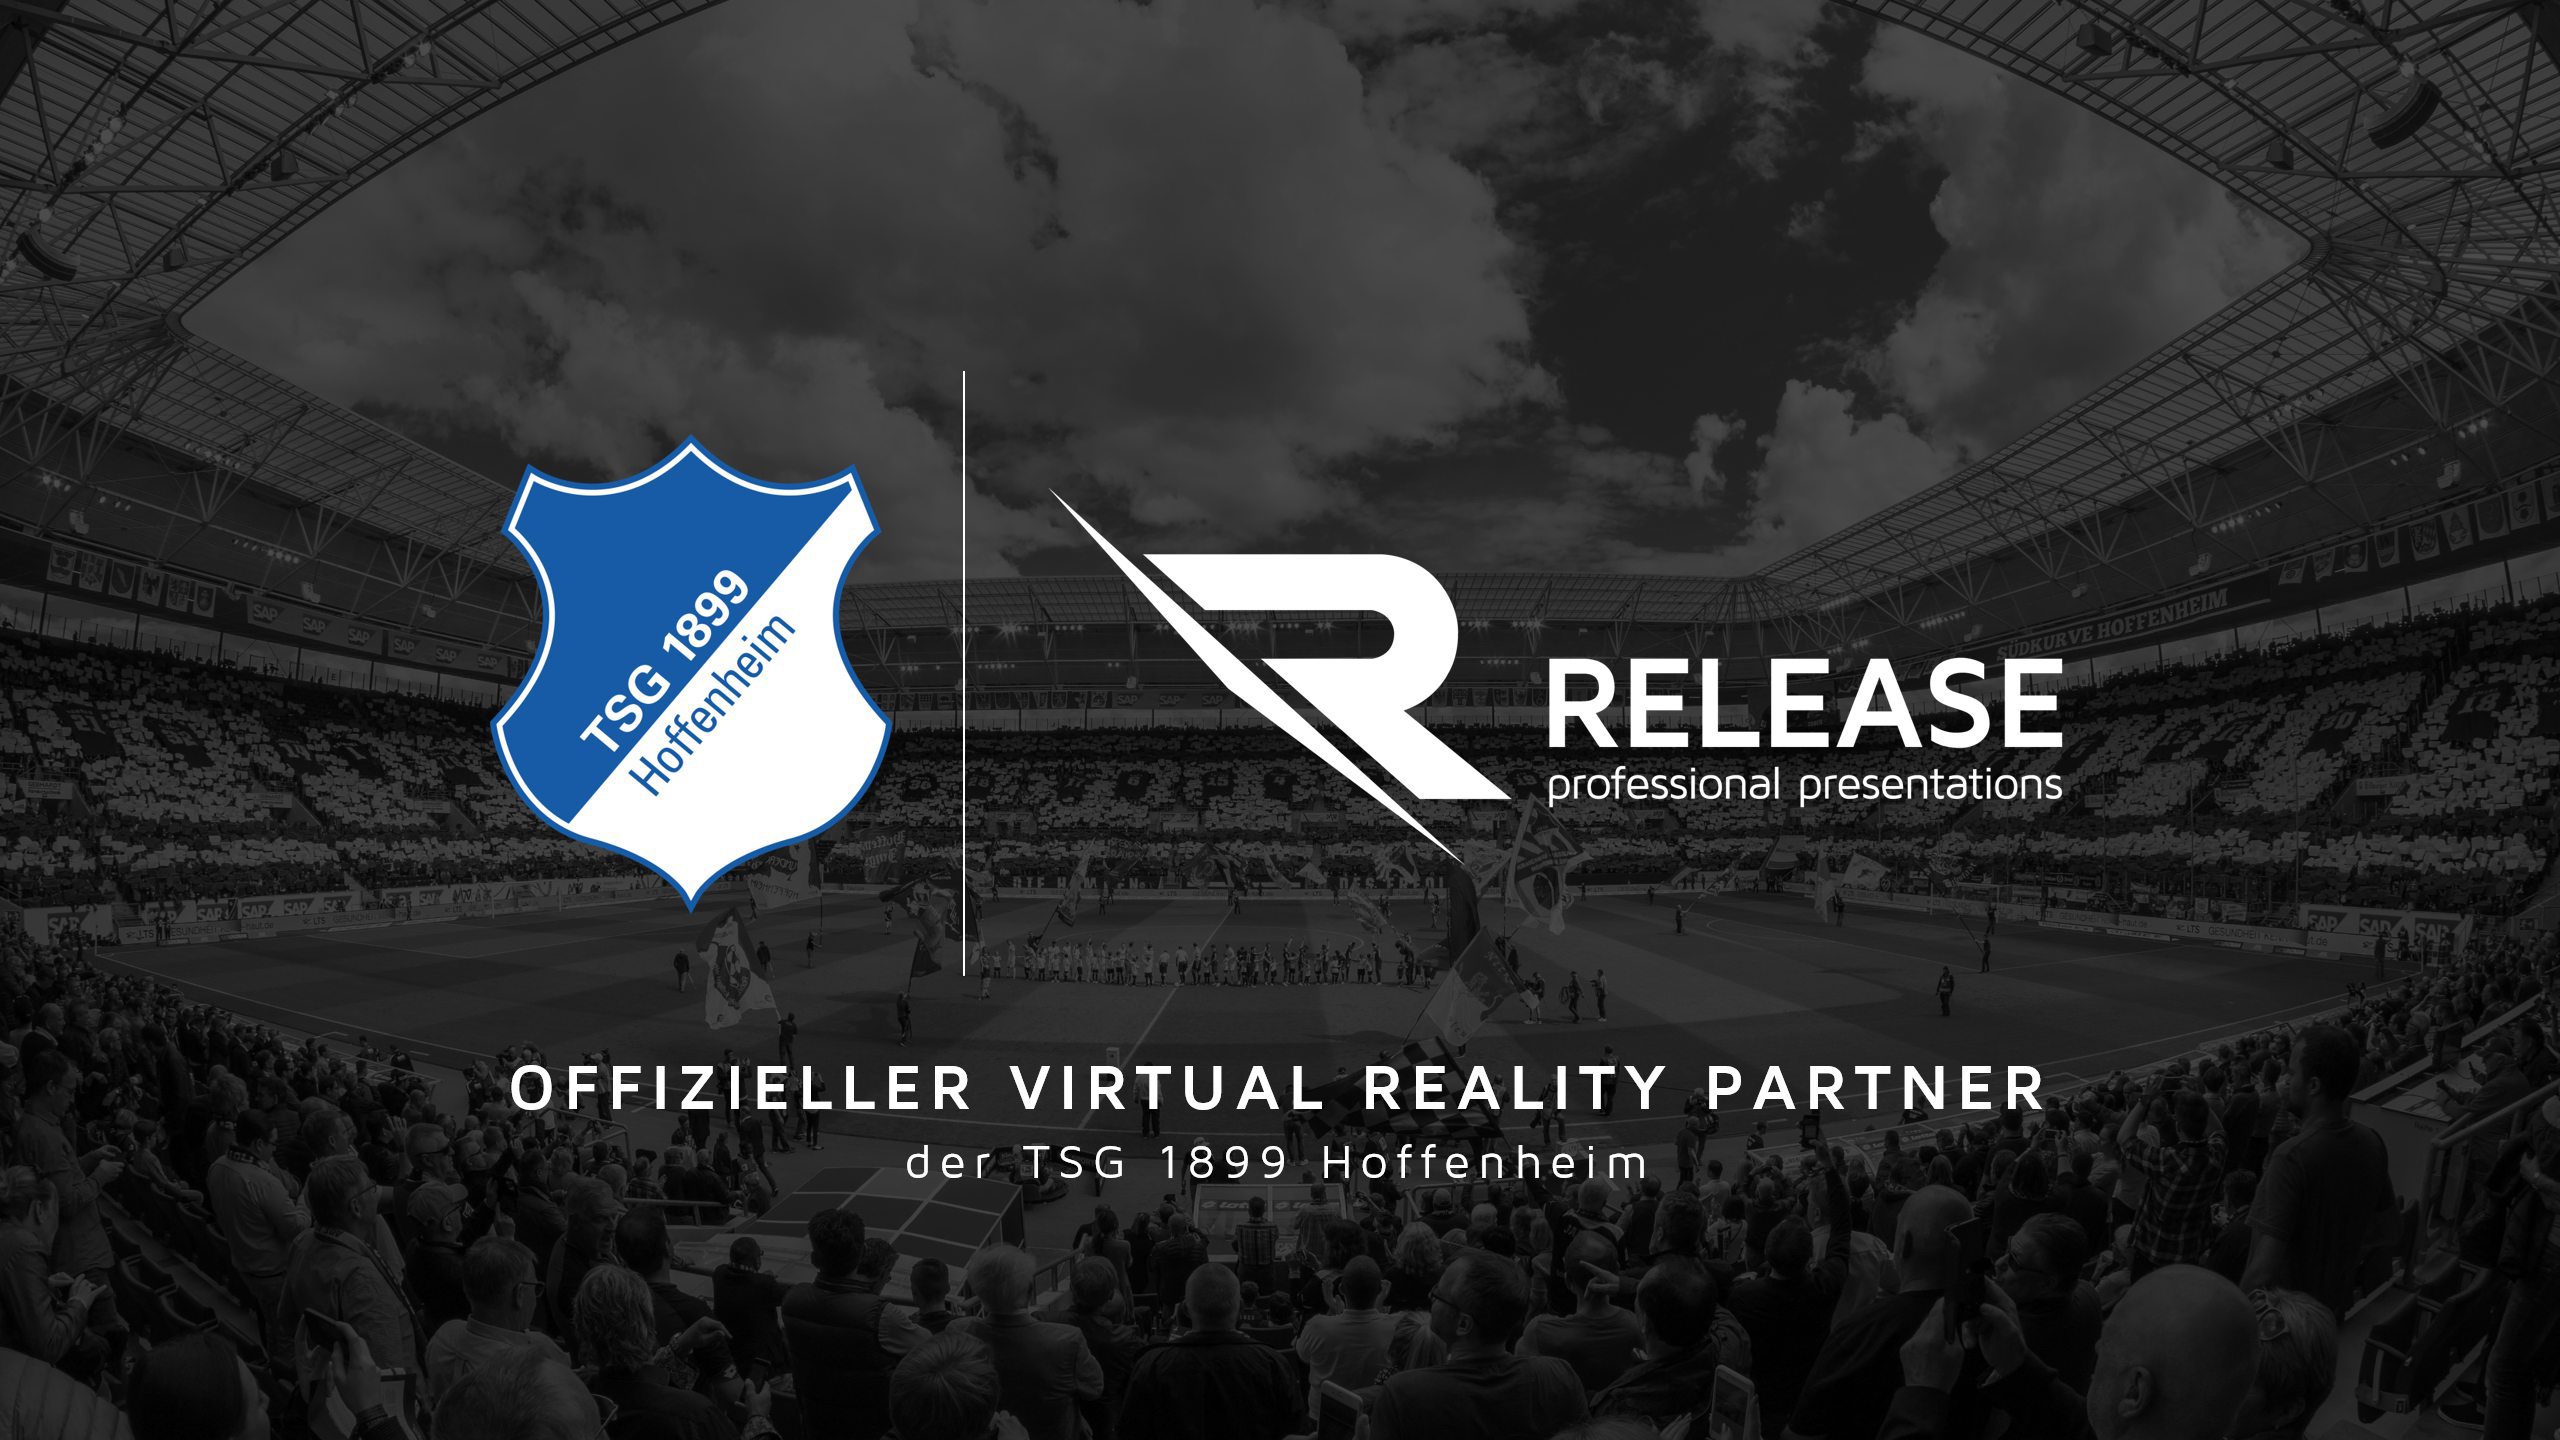 RELEASE ist der erste Virtual Reality Partner der Fußball Bundesliga